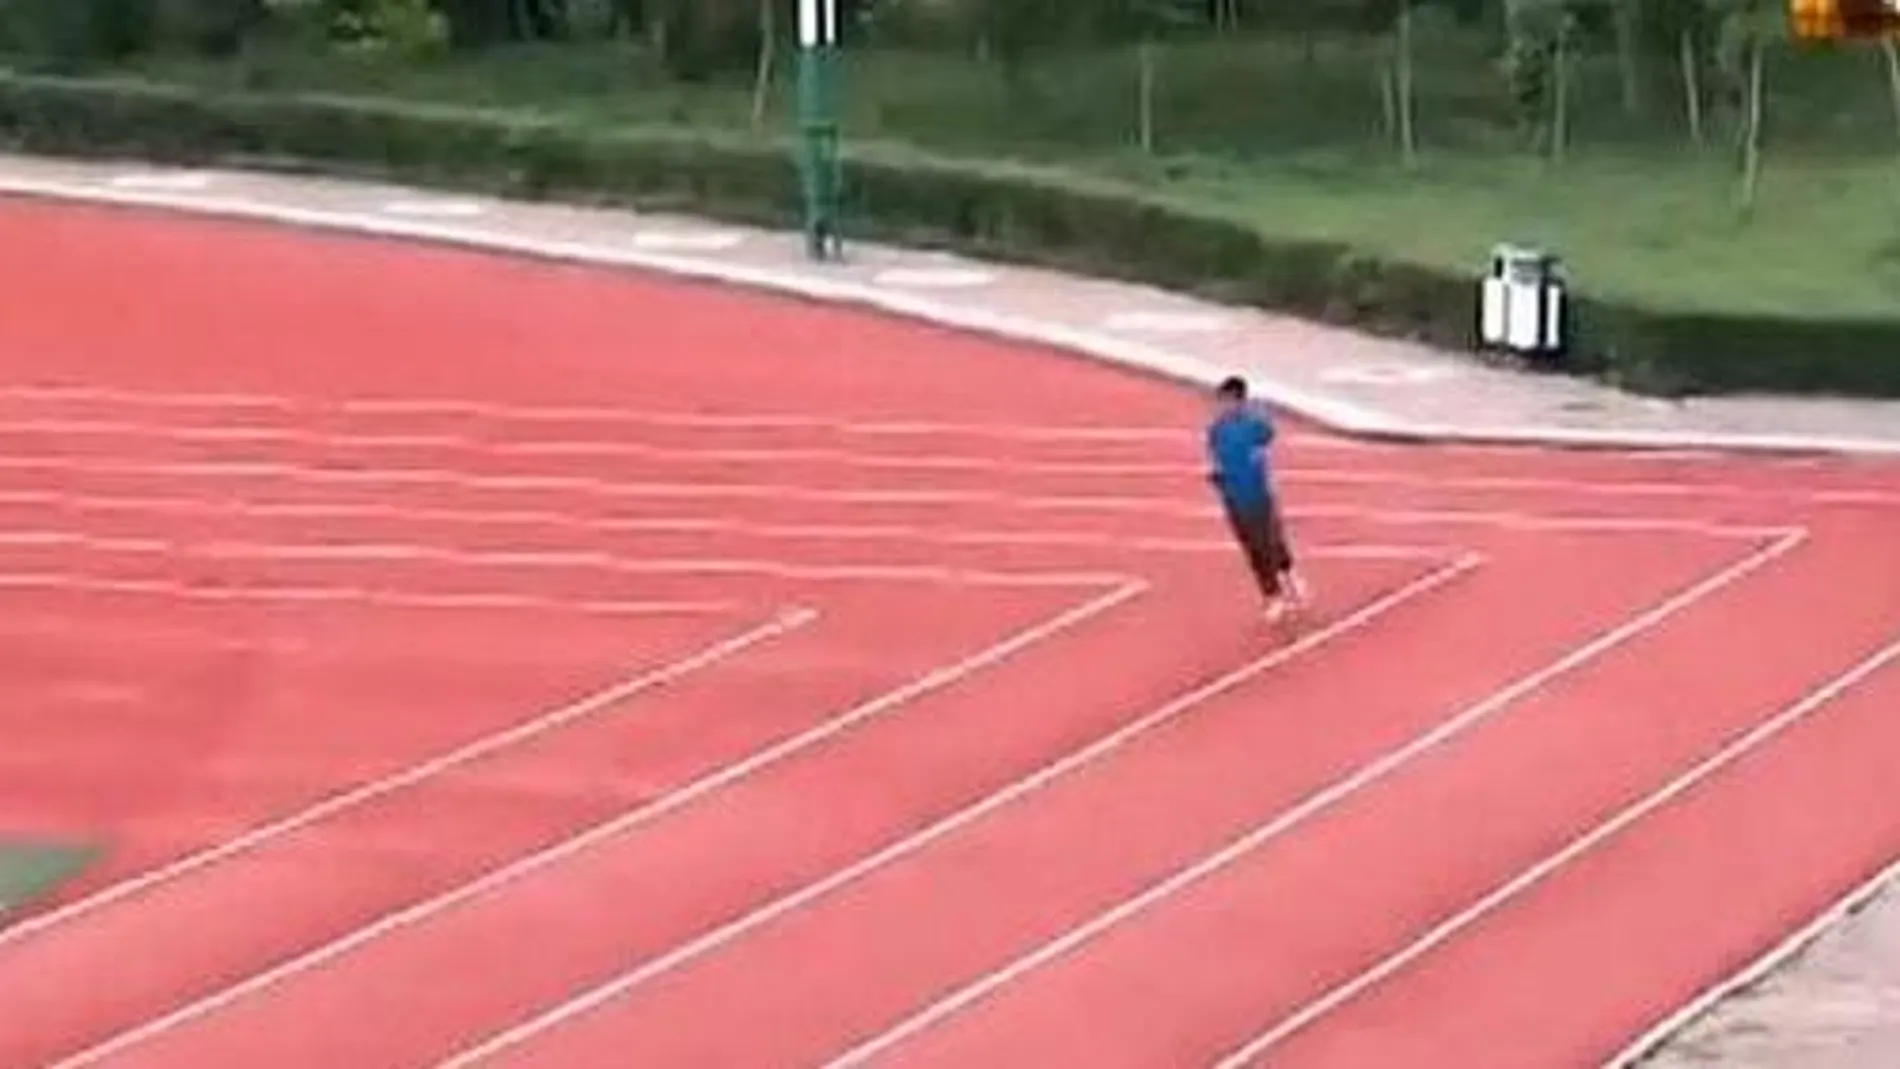 China construye la primera pista de atletismo rectangular